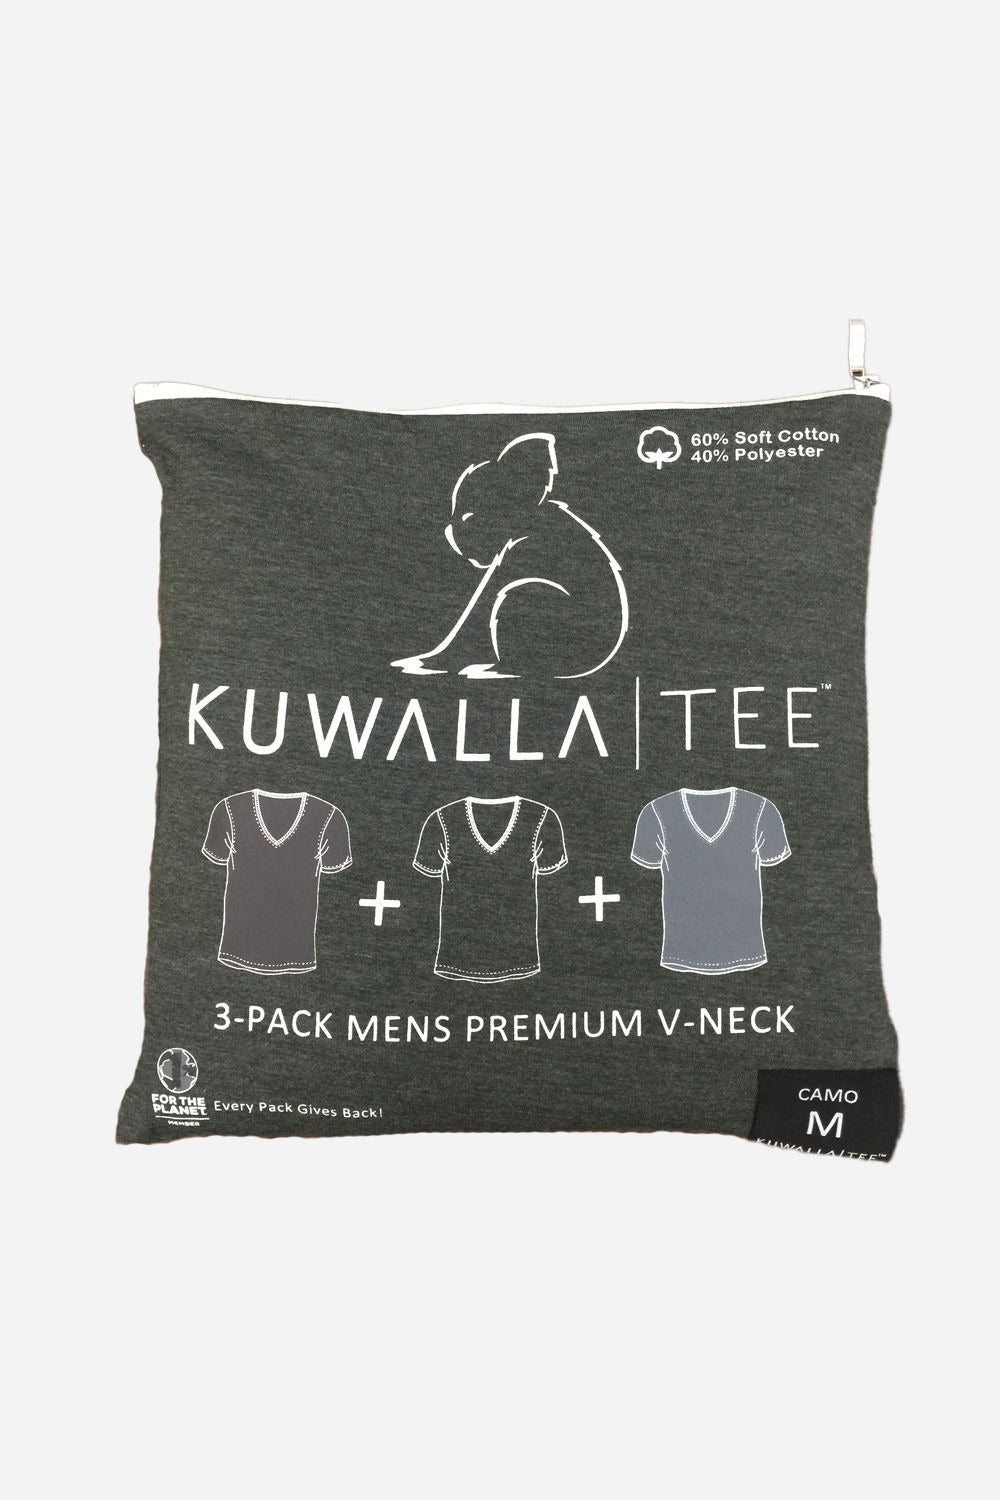 Kuwalla Tee Men Camo Vneck 3 Pack- KUL-VC016 - 0